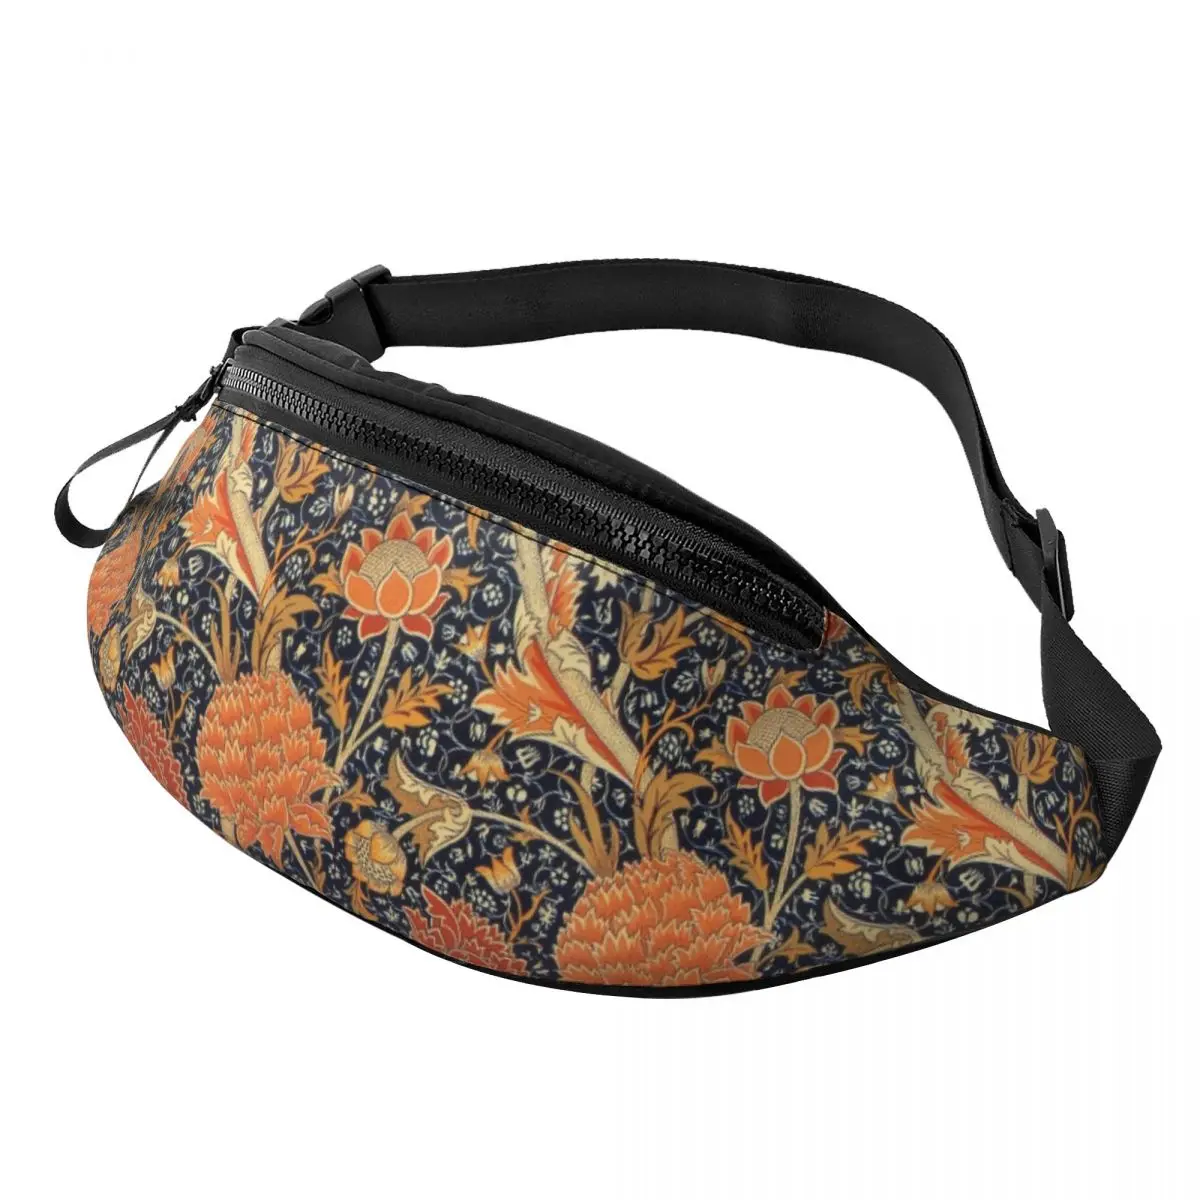 

William Morris Orange Cray Floral Fanny Pack for Travel Hiking Women Men Textile Pattern Crossbody Waist Bag Phone Money Pouch